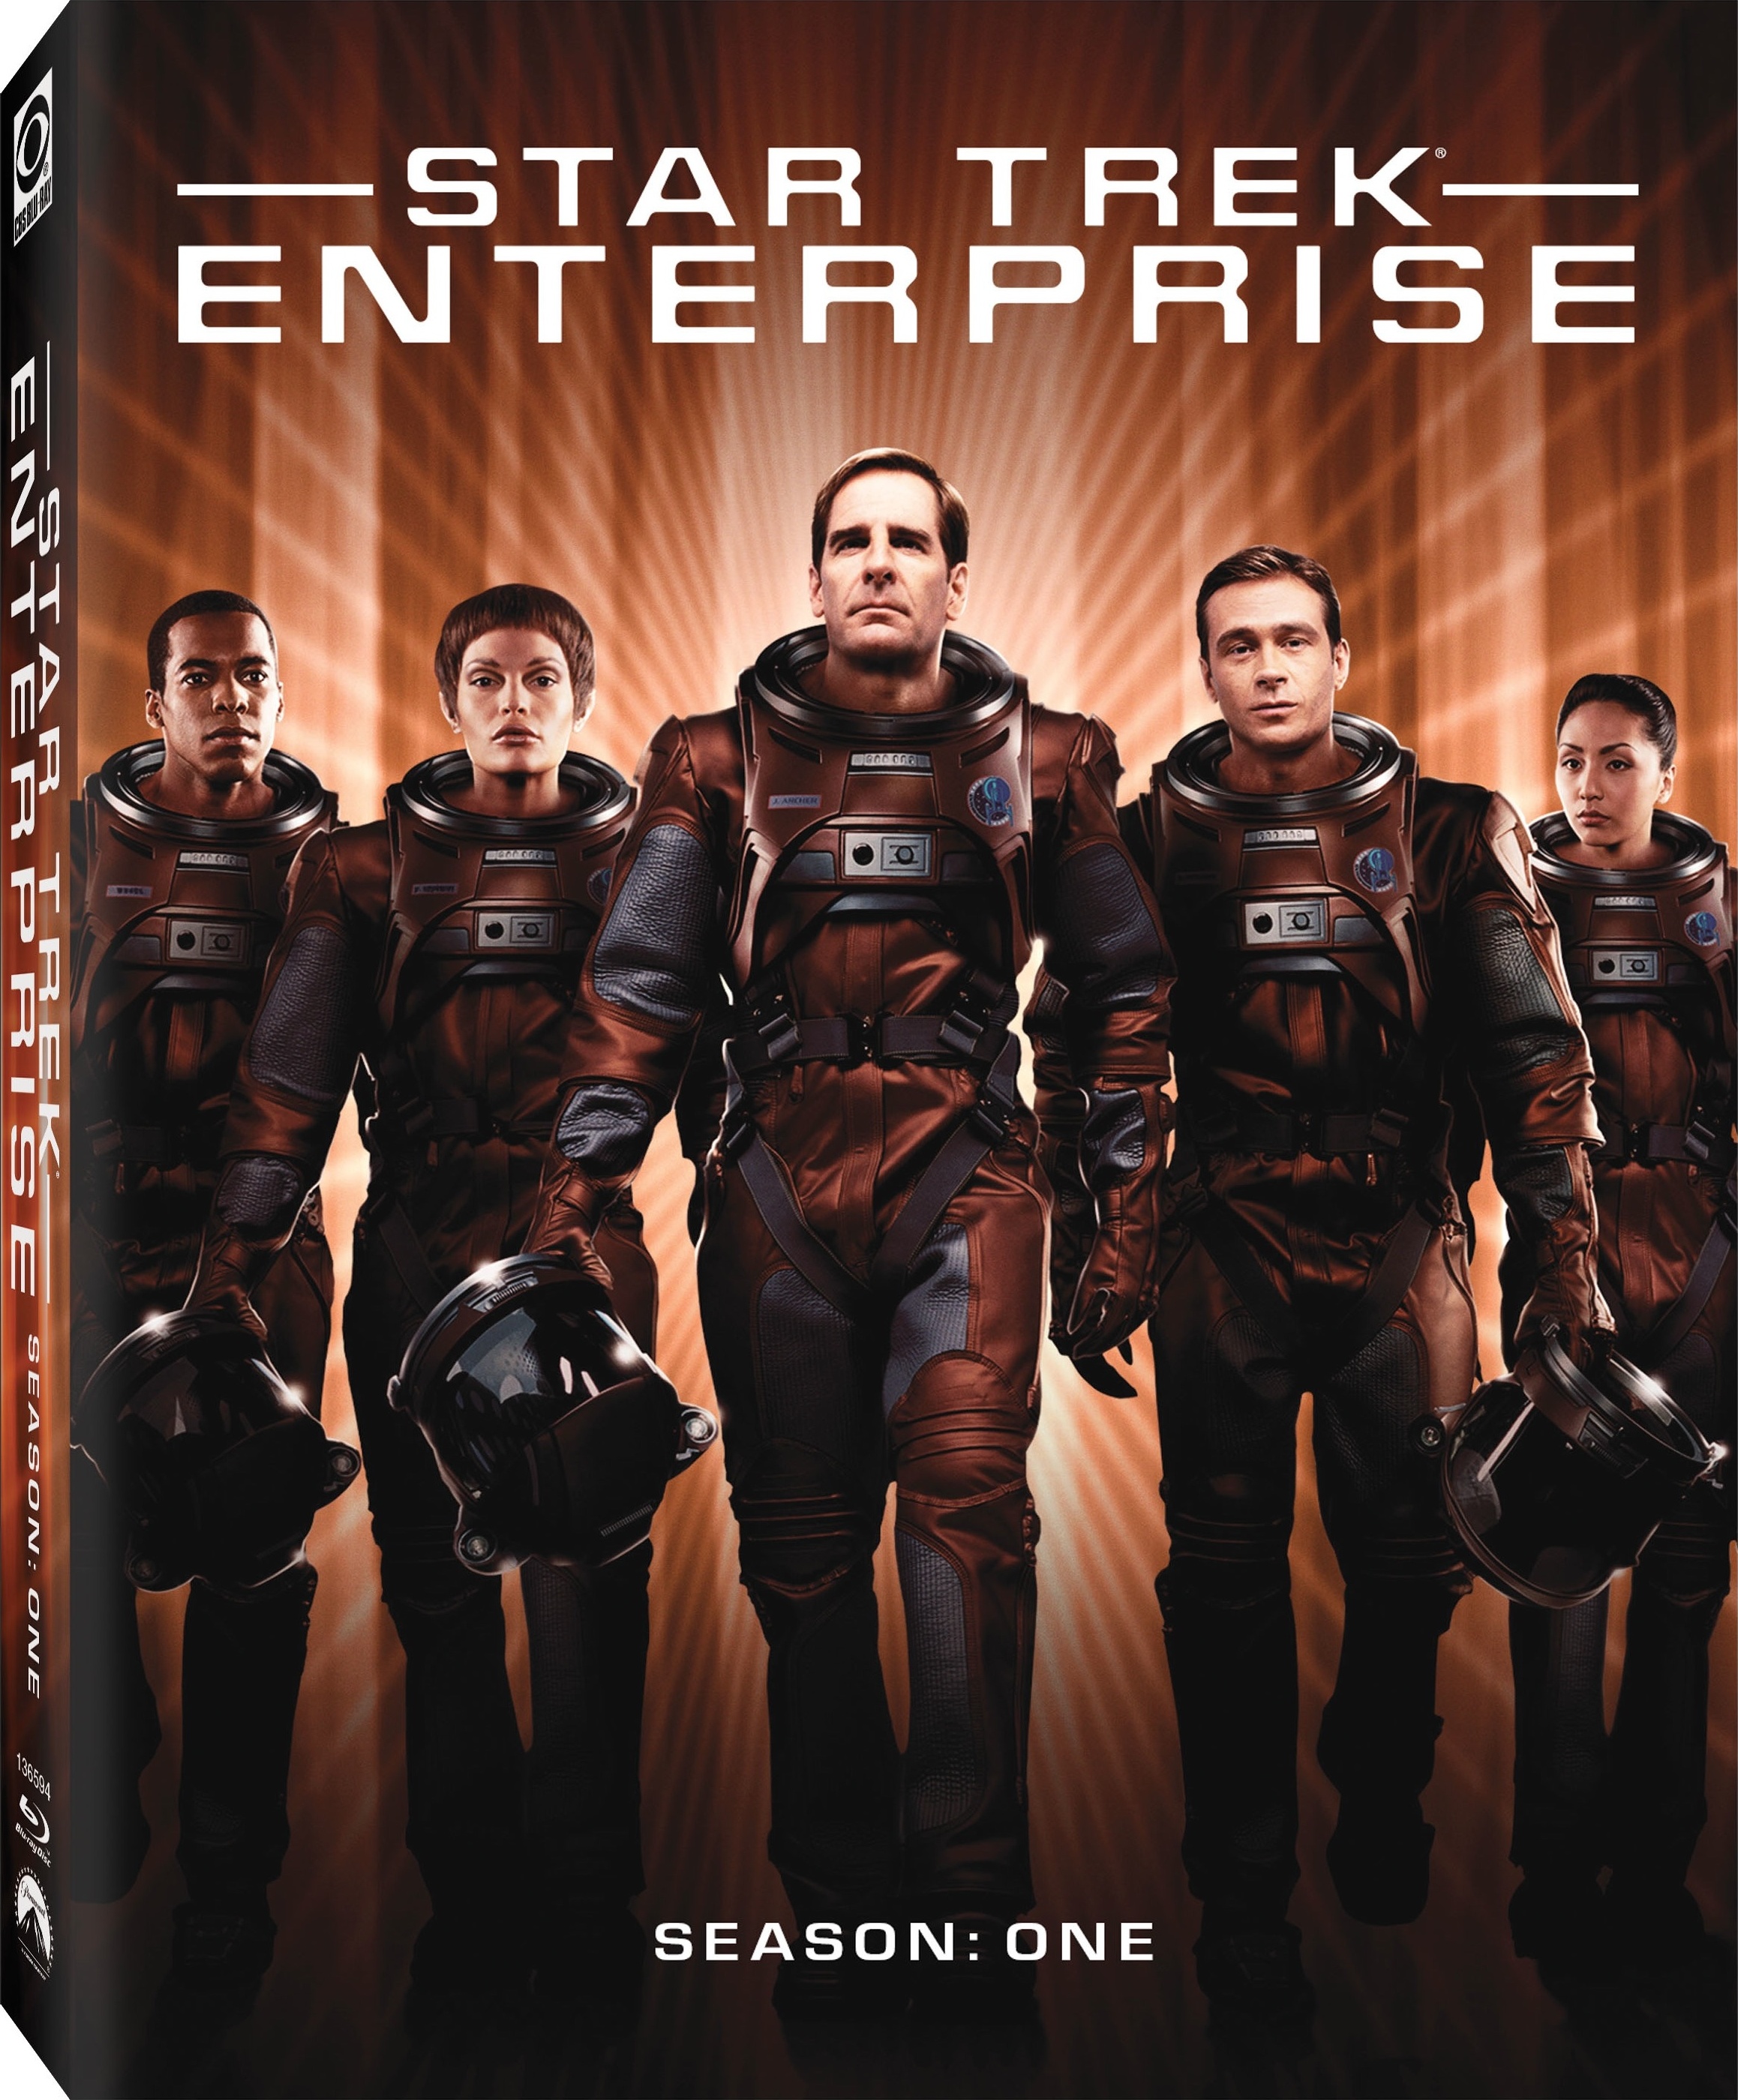 Star Trek Enterprise in Blu-Ray